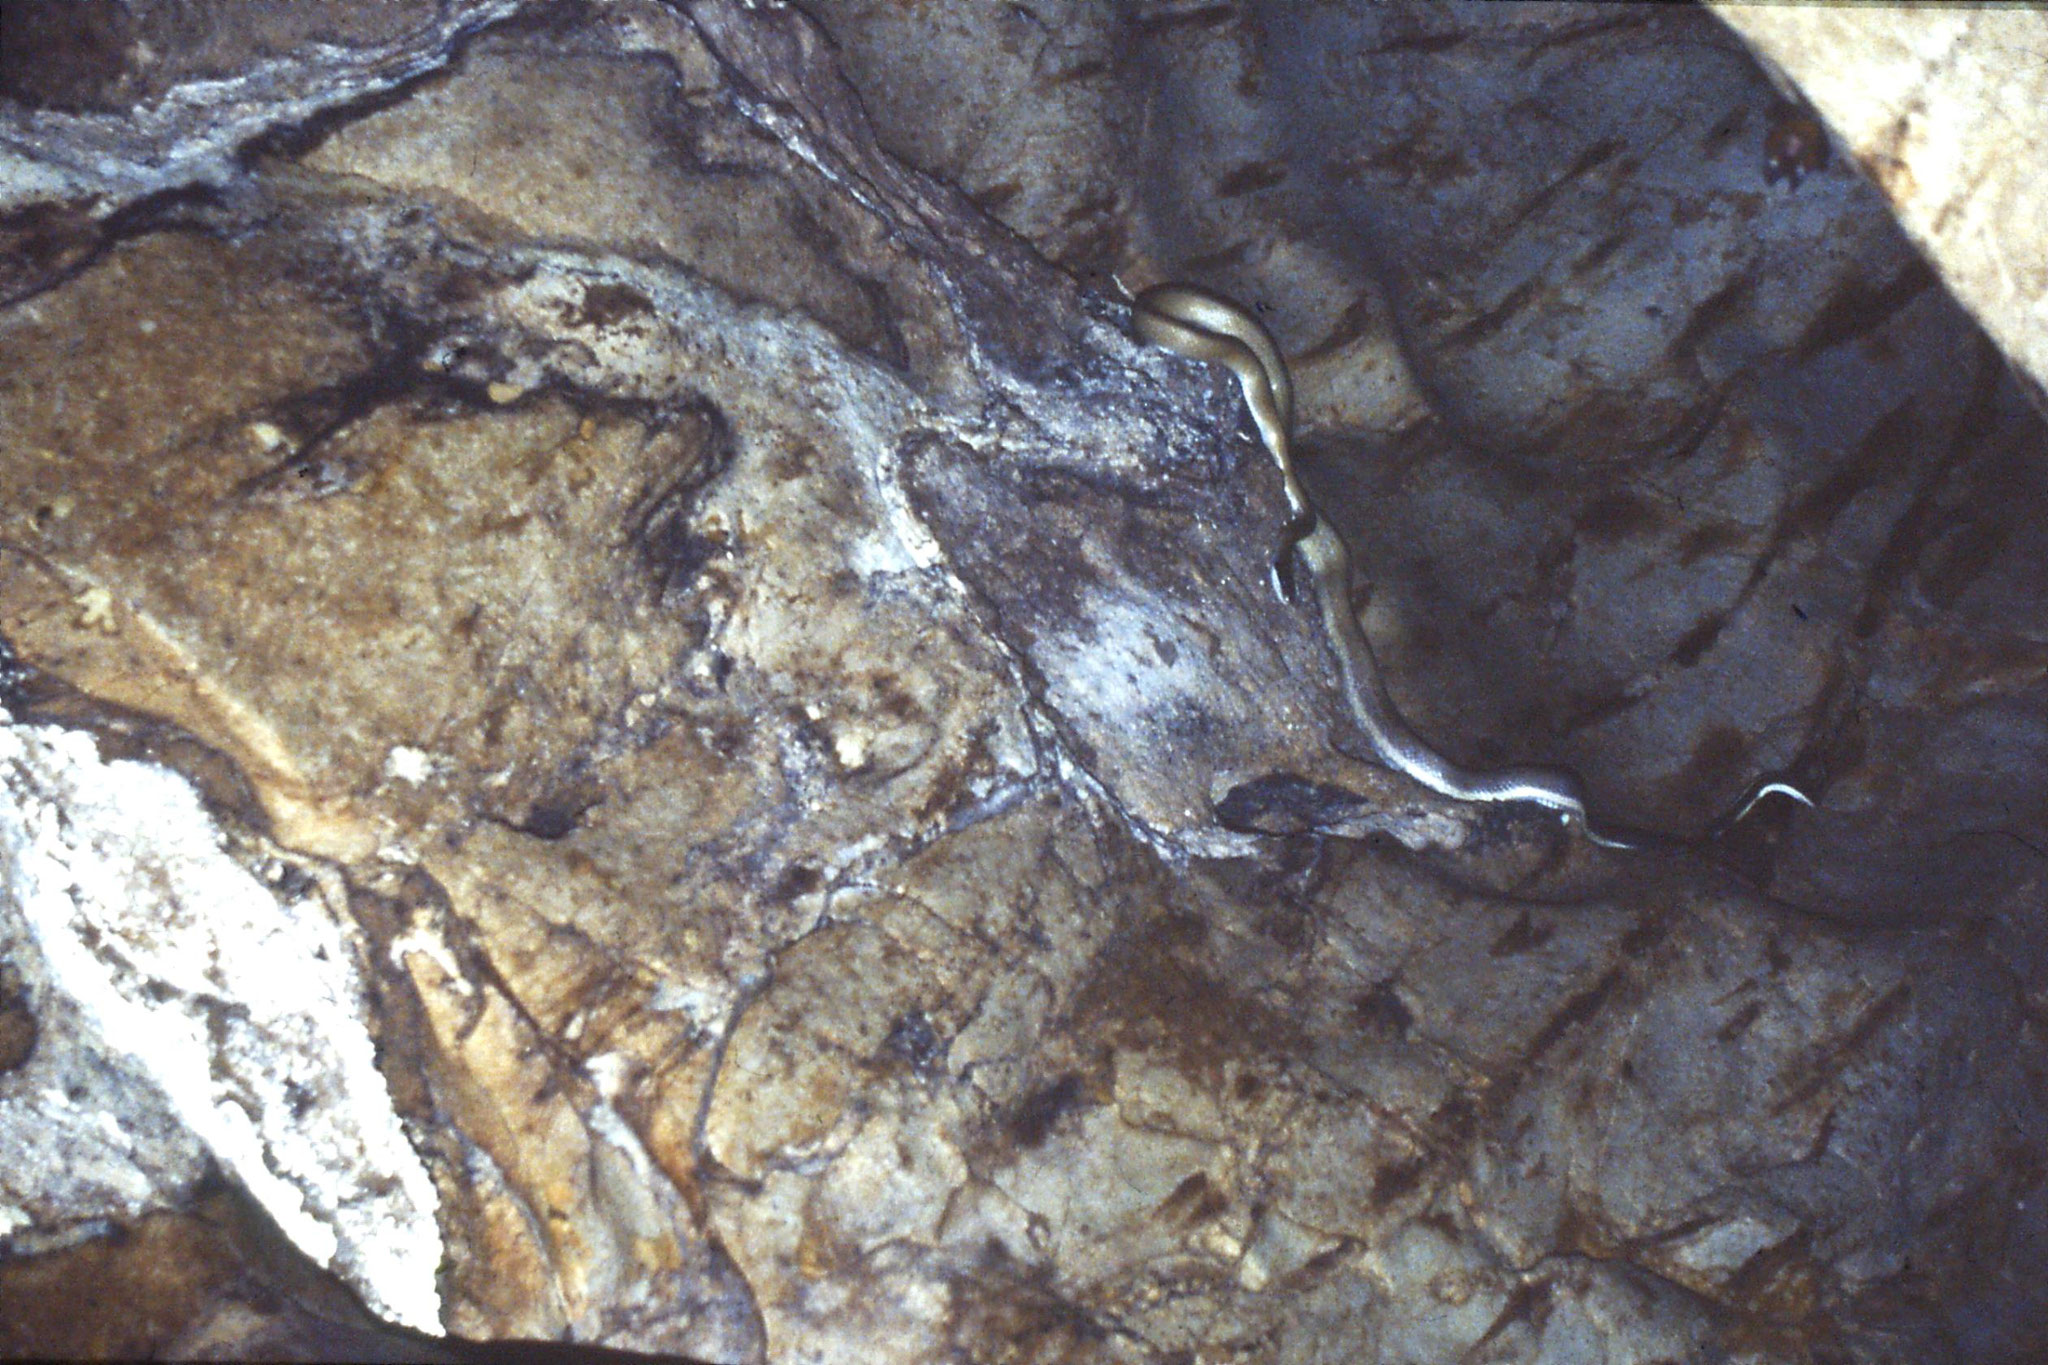 26/6/1990: 21: Tamen Negara bat cave and Cave Racer snake